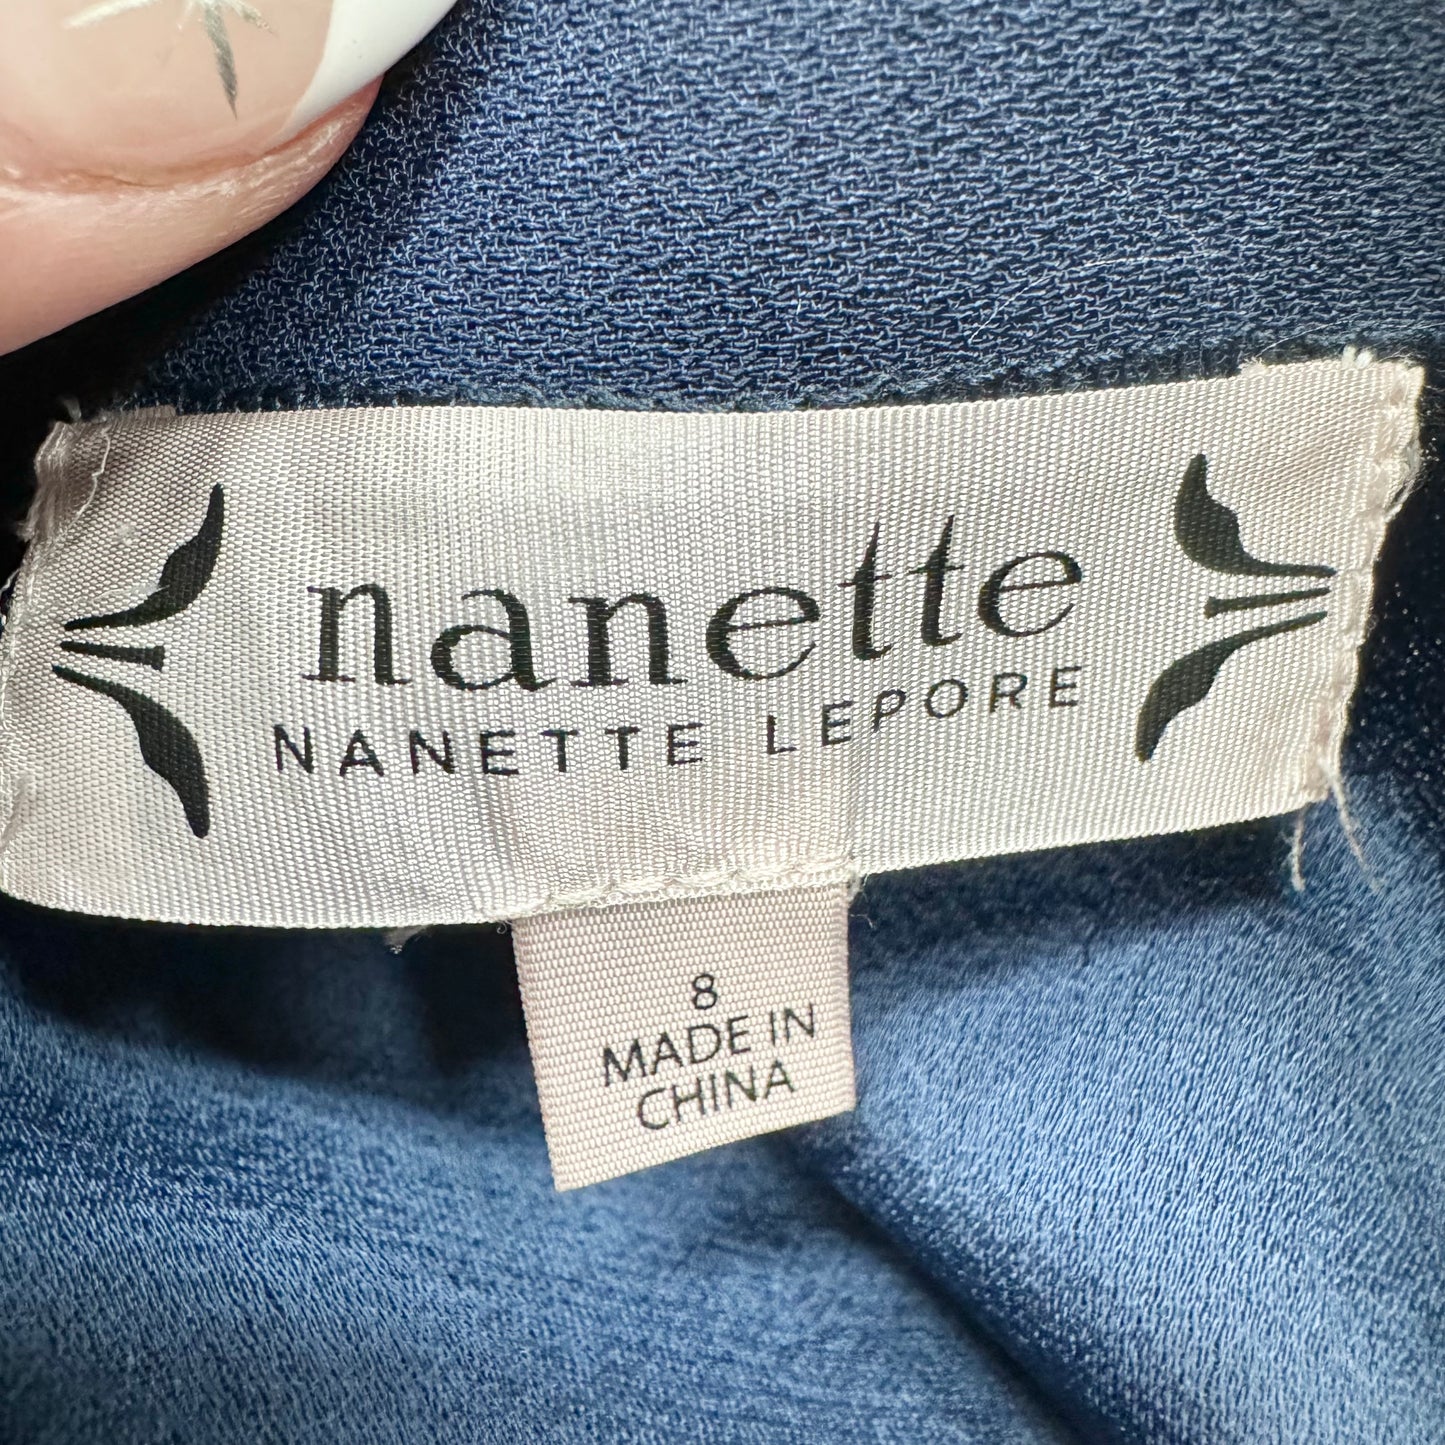 Dress Designer By Nanette Lepore  Size: M